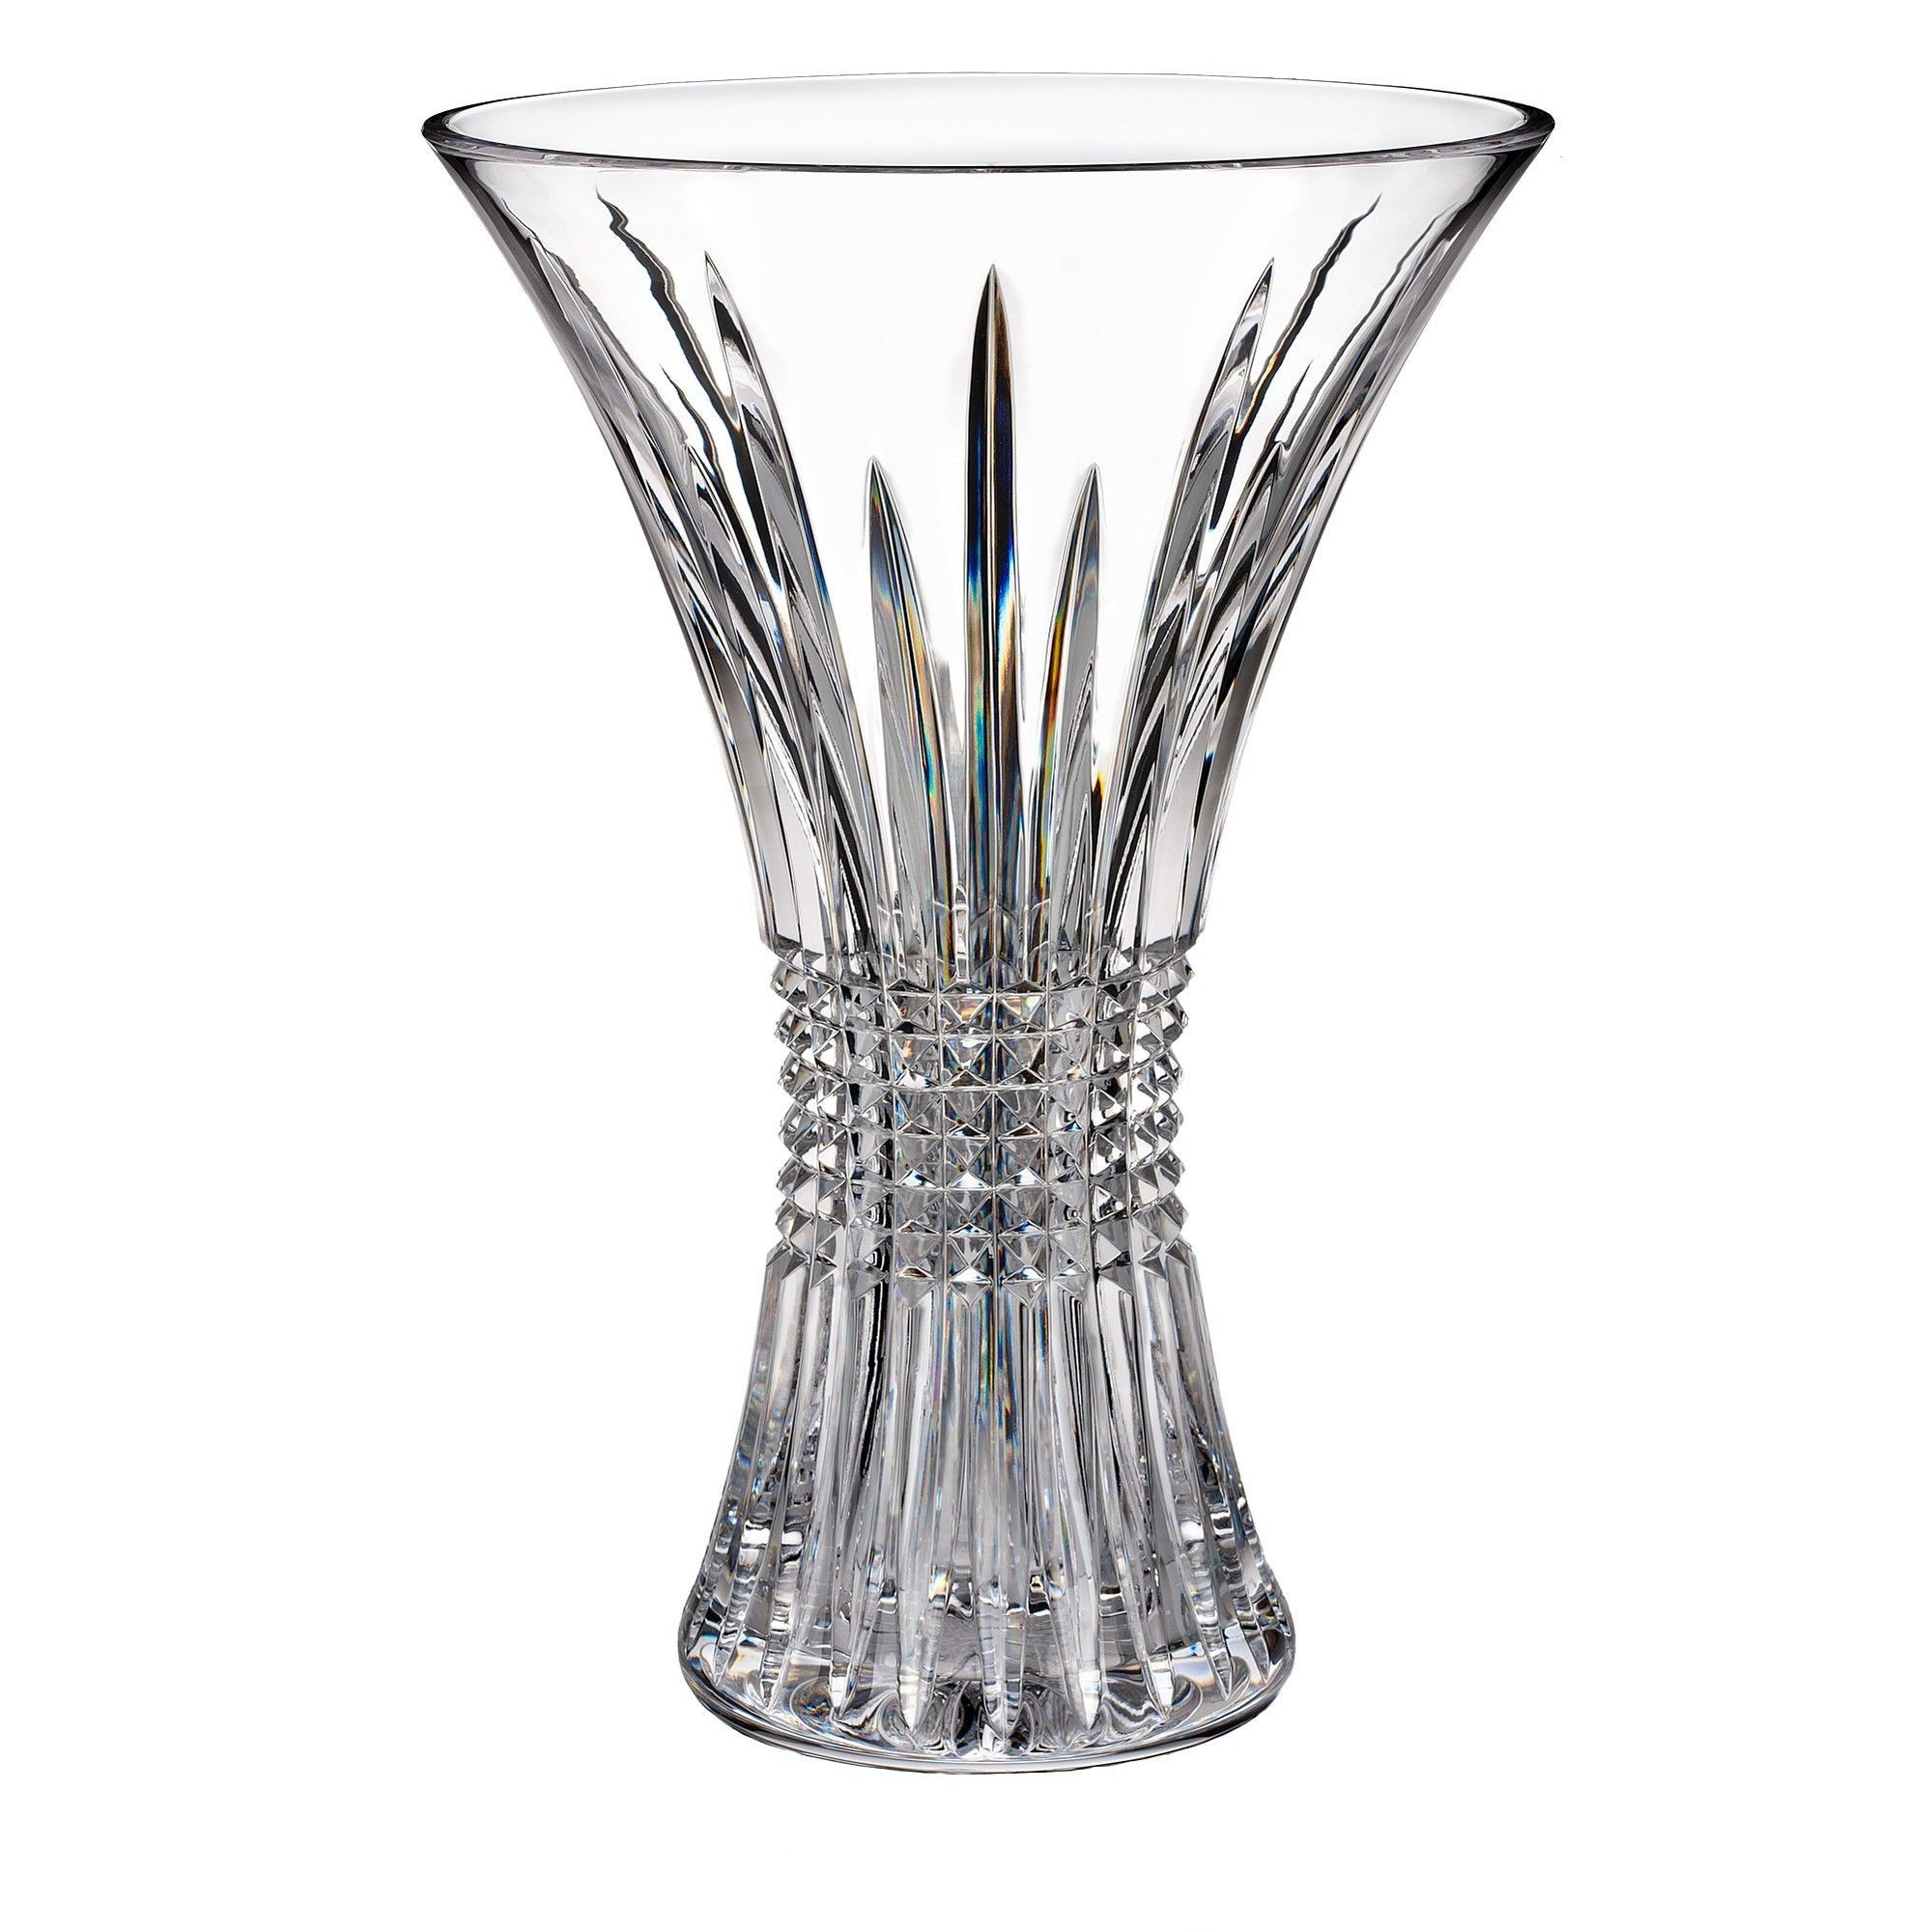 28 Lovable Mikasa atlantic Crystal Vase 2024 free download mikasa atlantic crystal vase of lismore diamond vase within 213209d81145b837ad8020d8f4c74a3e